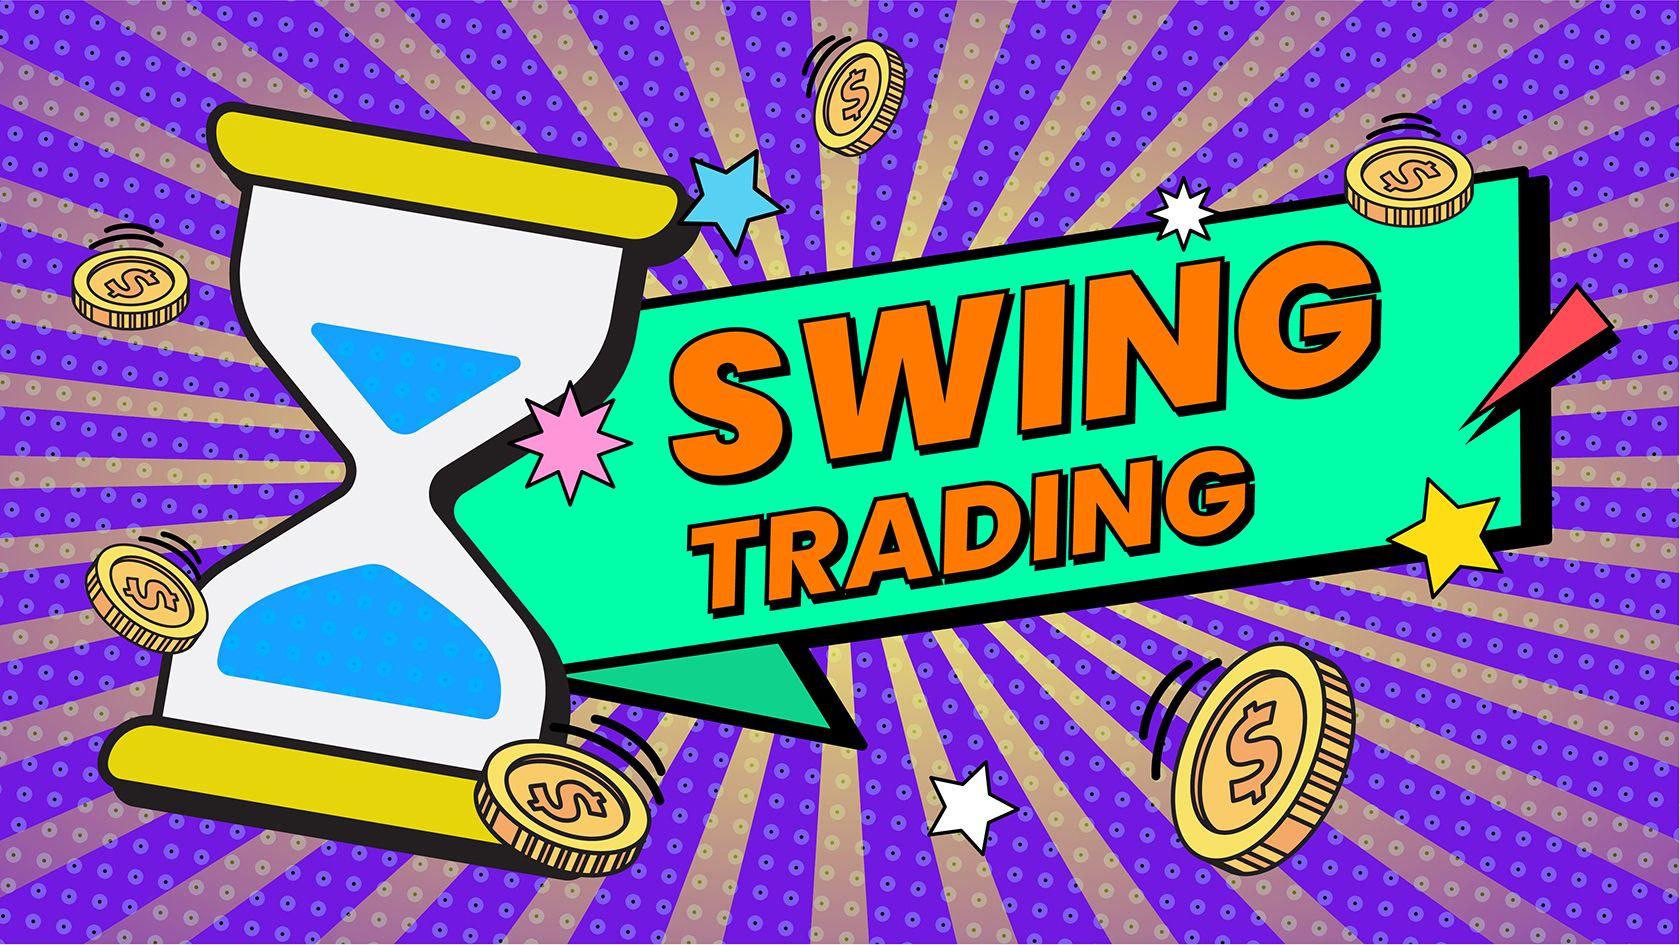 Swing-Trading-5OOzQ.jpg